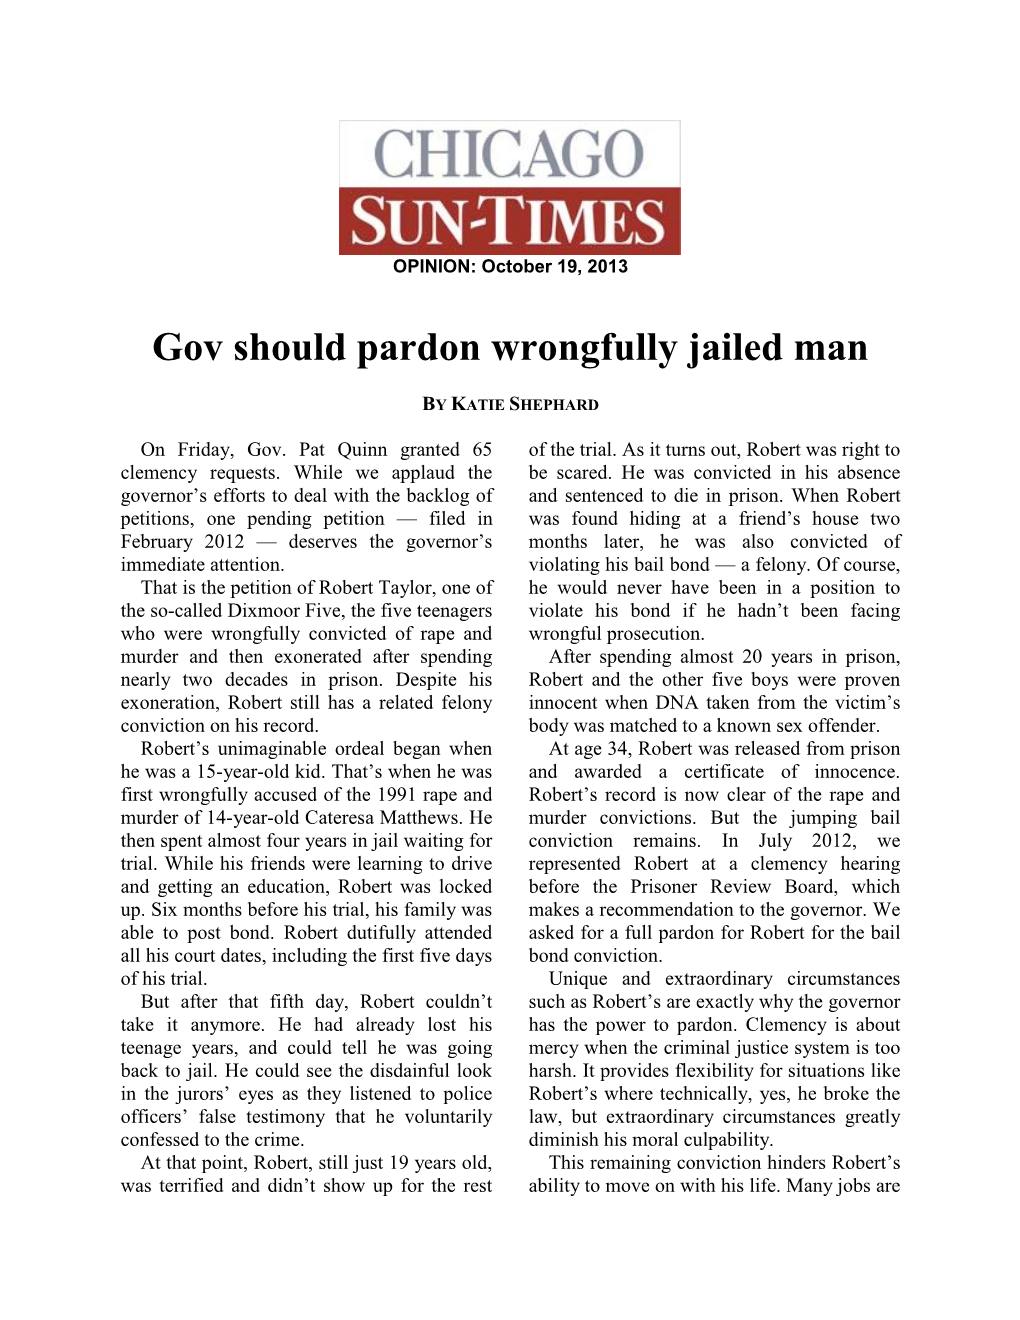 Gov Should Pardon Wrongfully Jailed Man